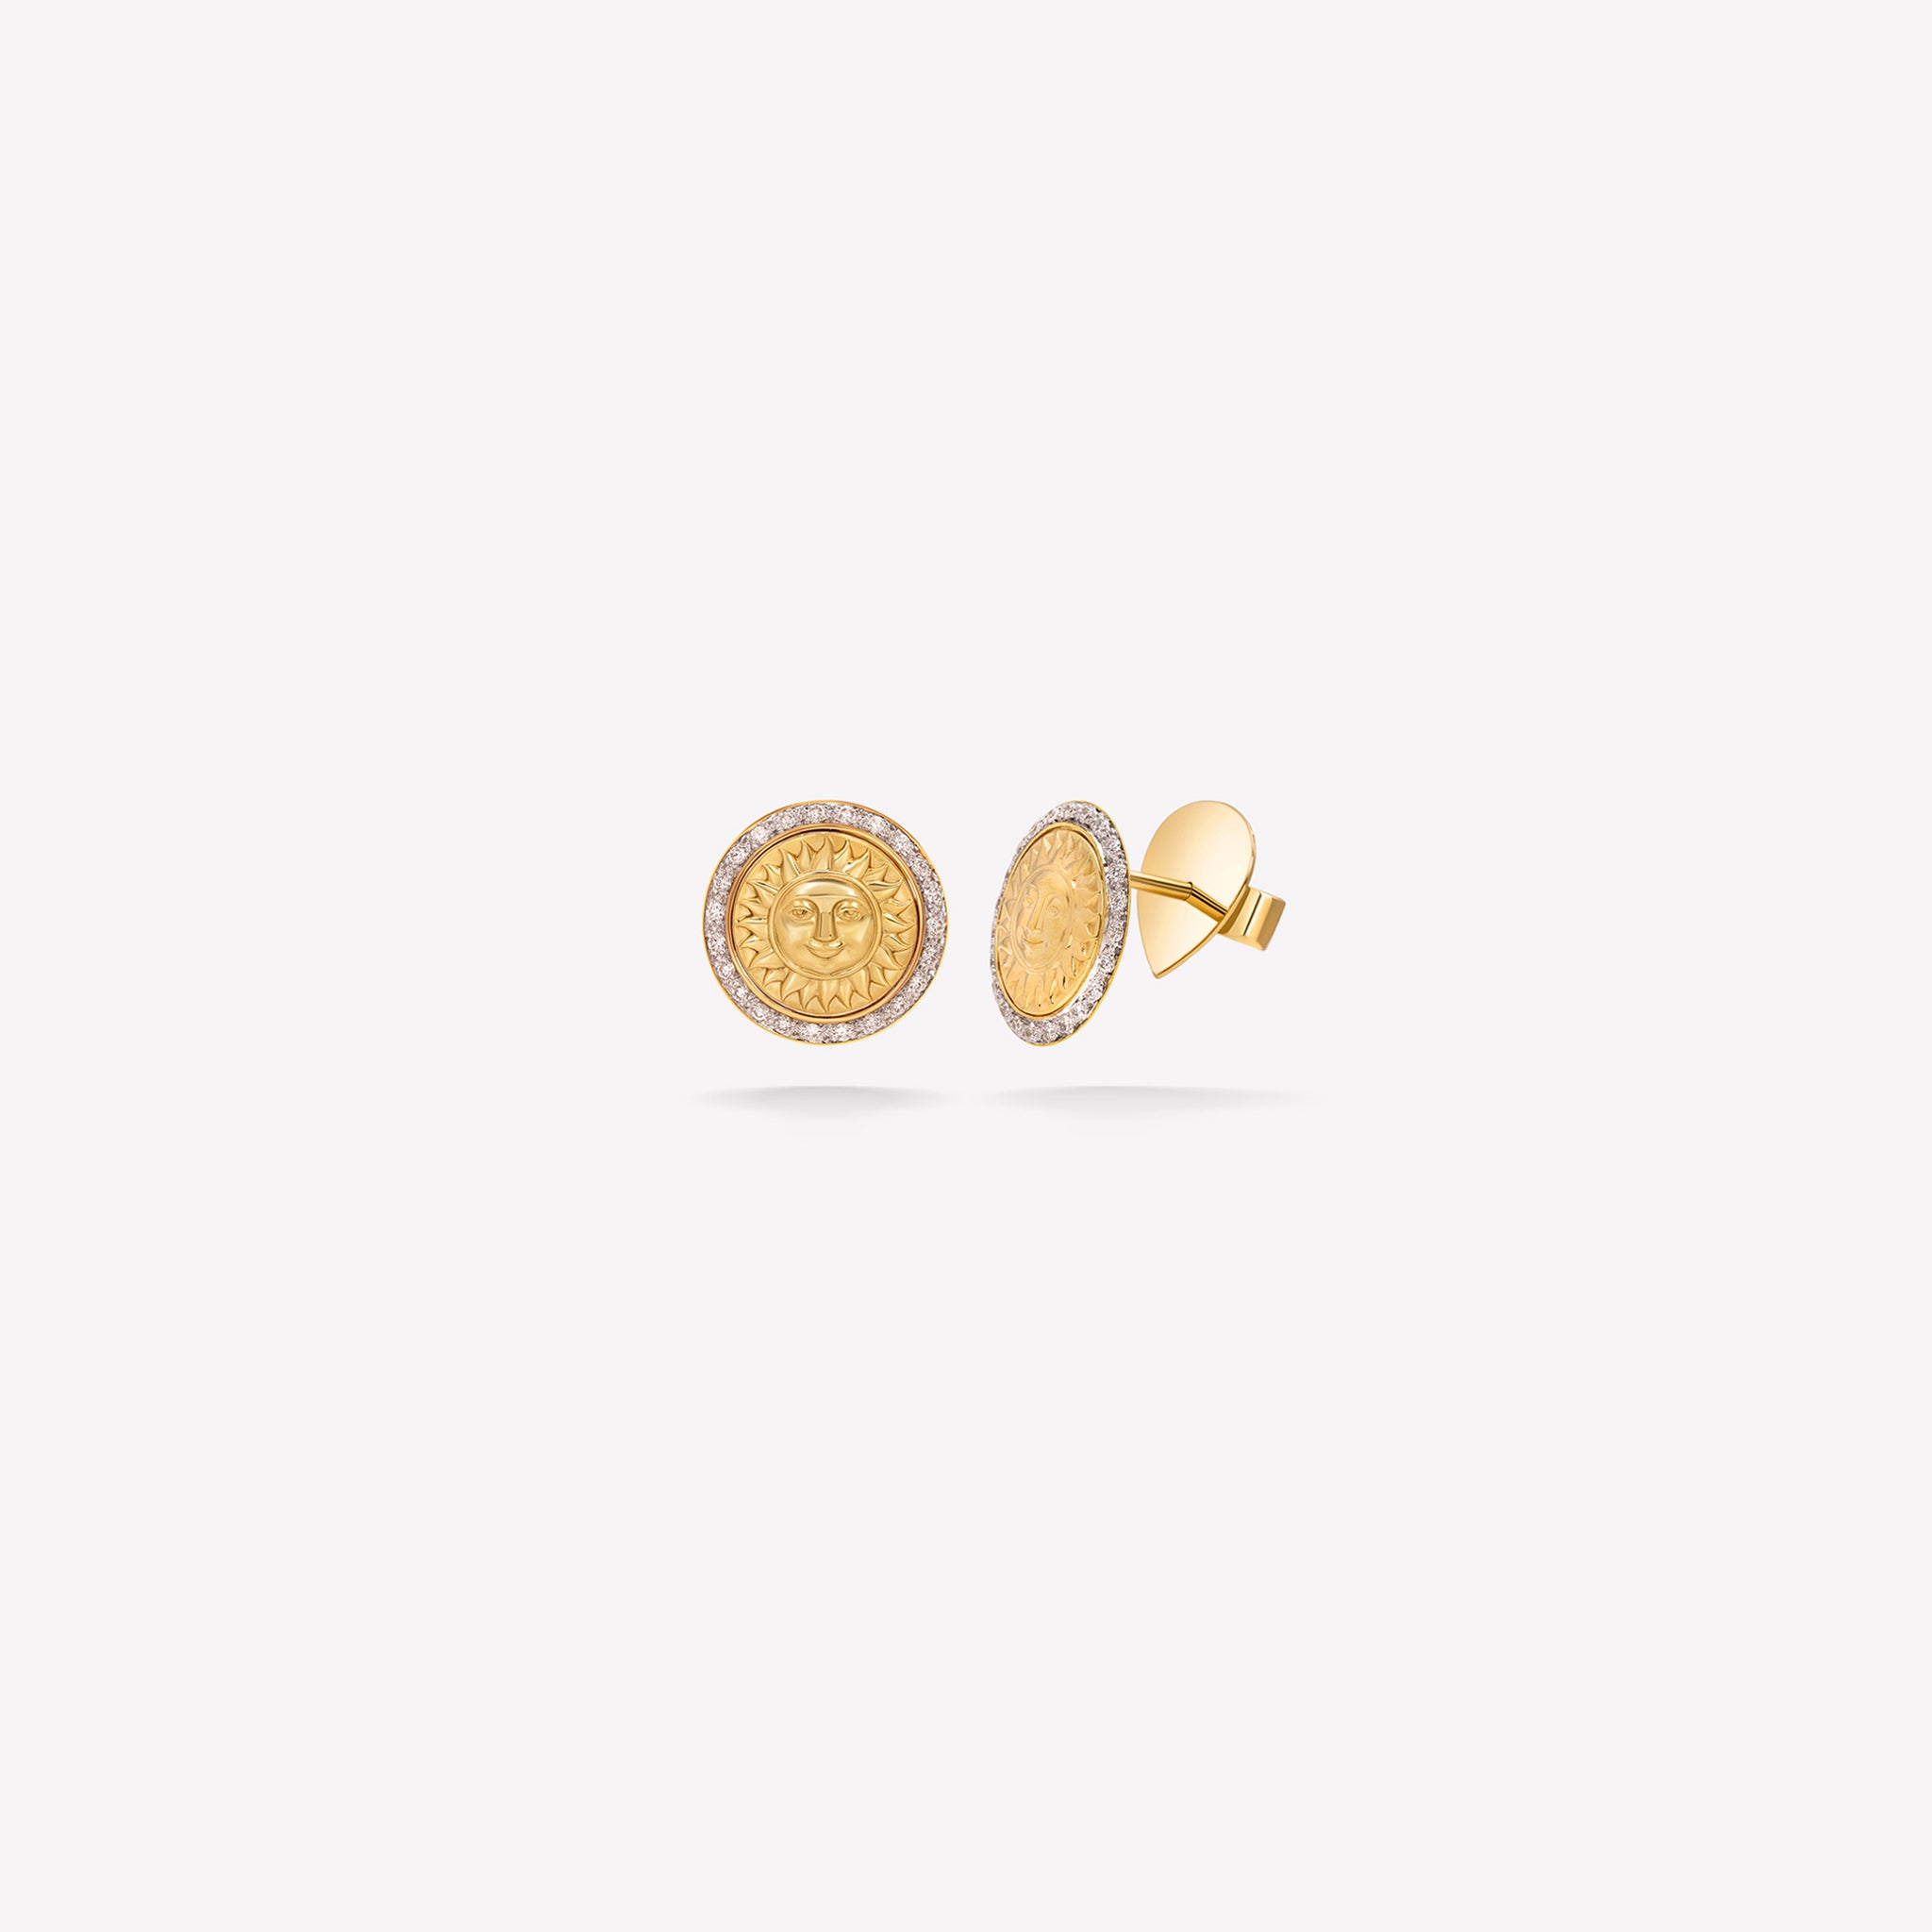 marinab.com, Soleil Small Gold Pav&eacute; Stud Earrings